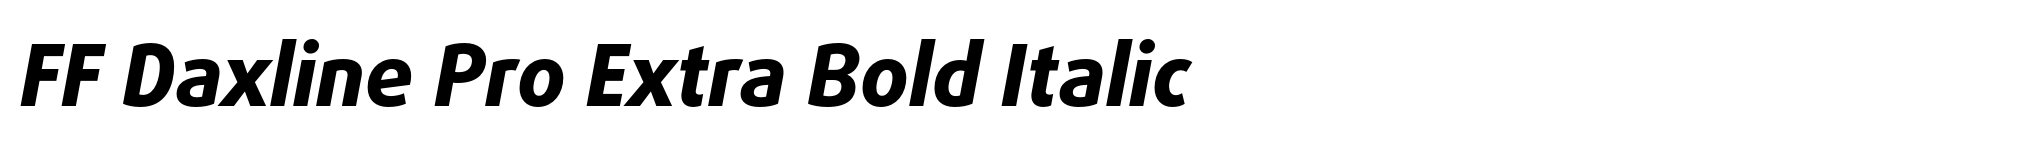 FF Daxline Pro Extra Bold Italic image